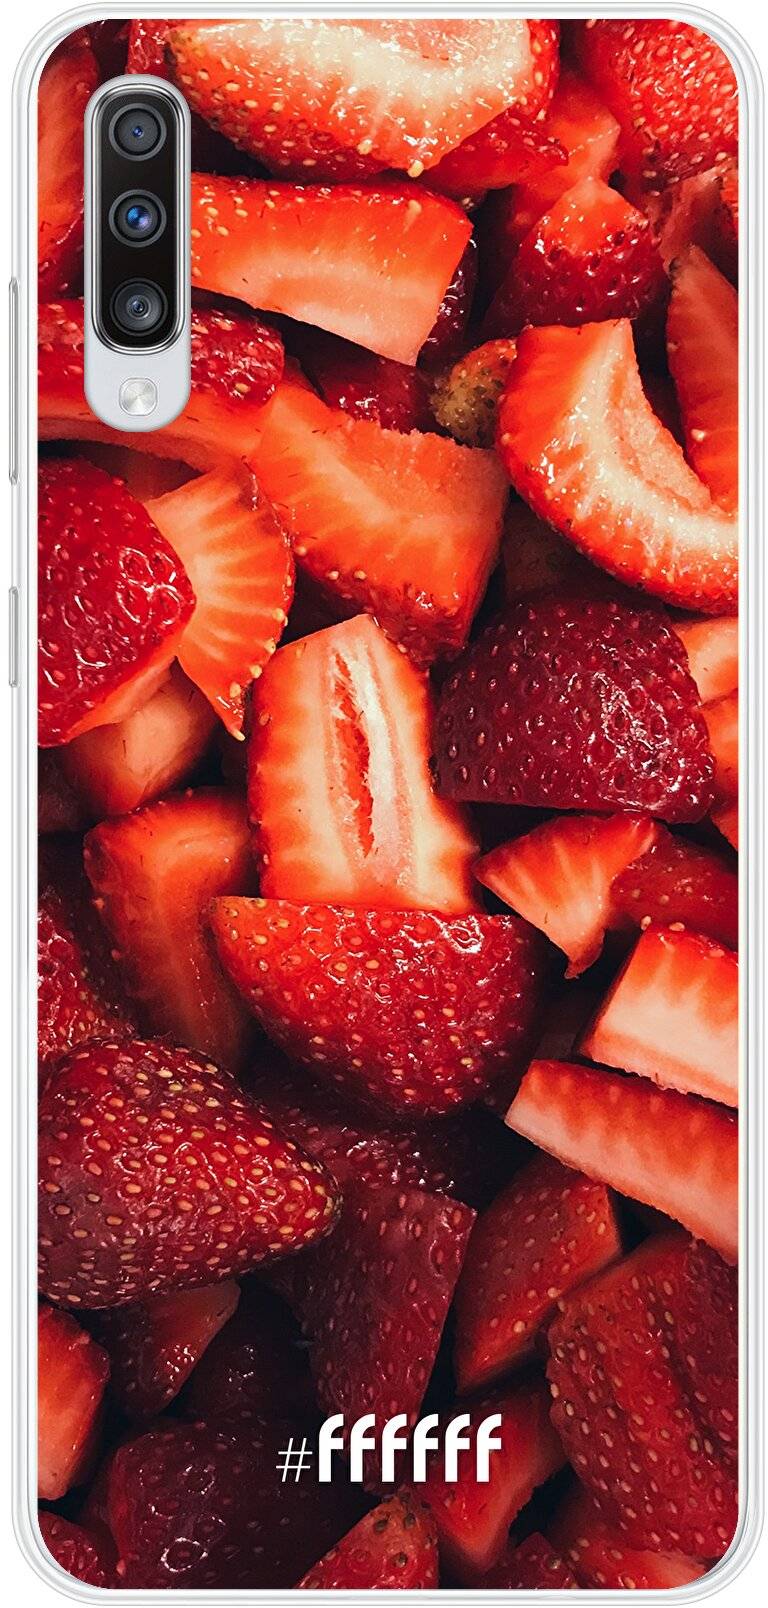 Strawberry Fields Galaxy A70